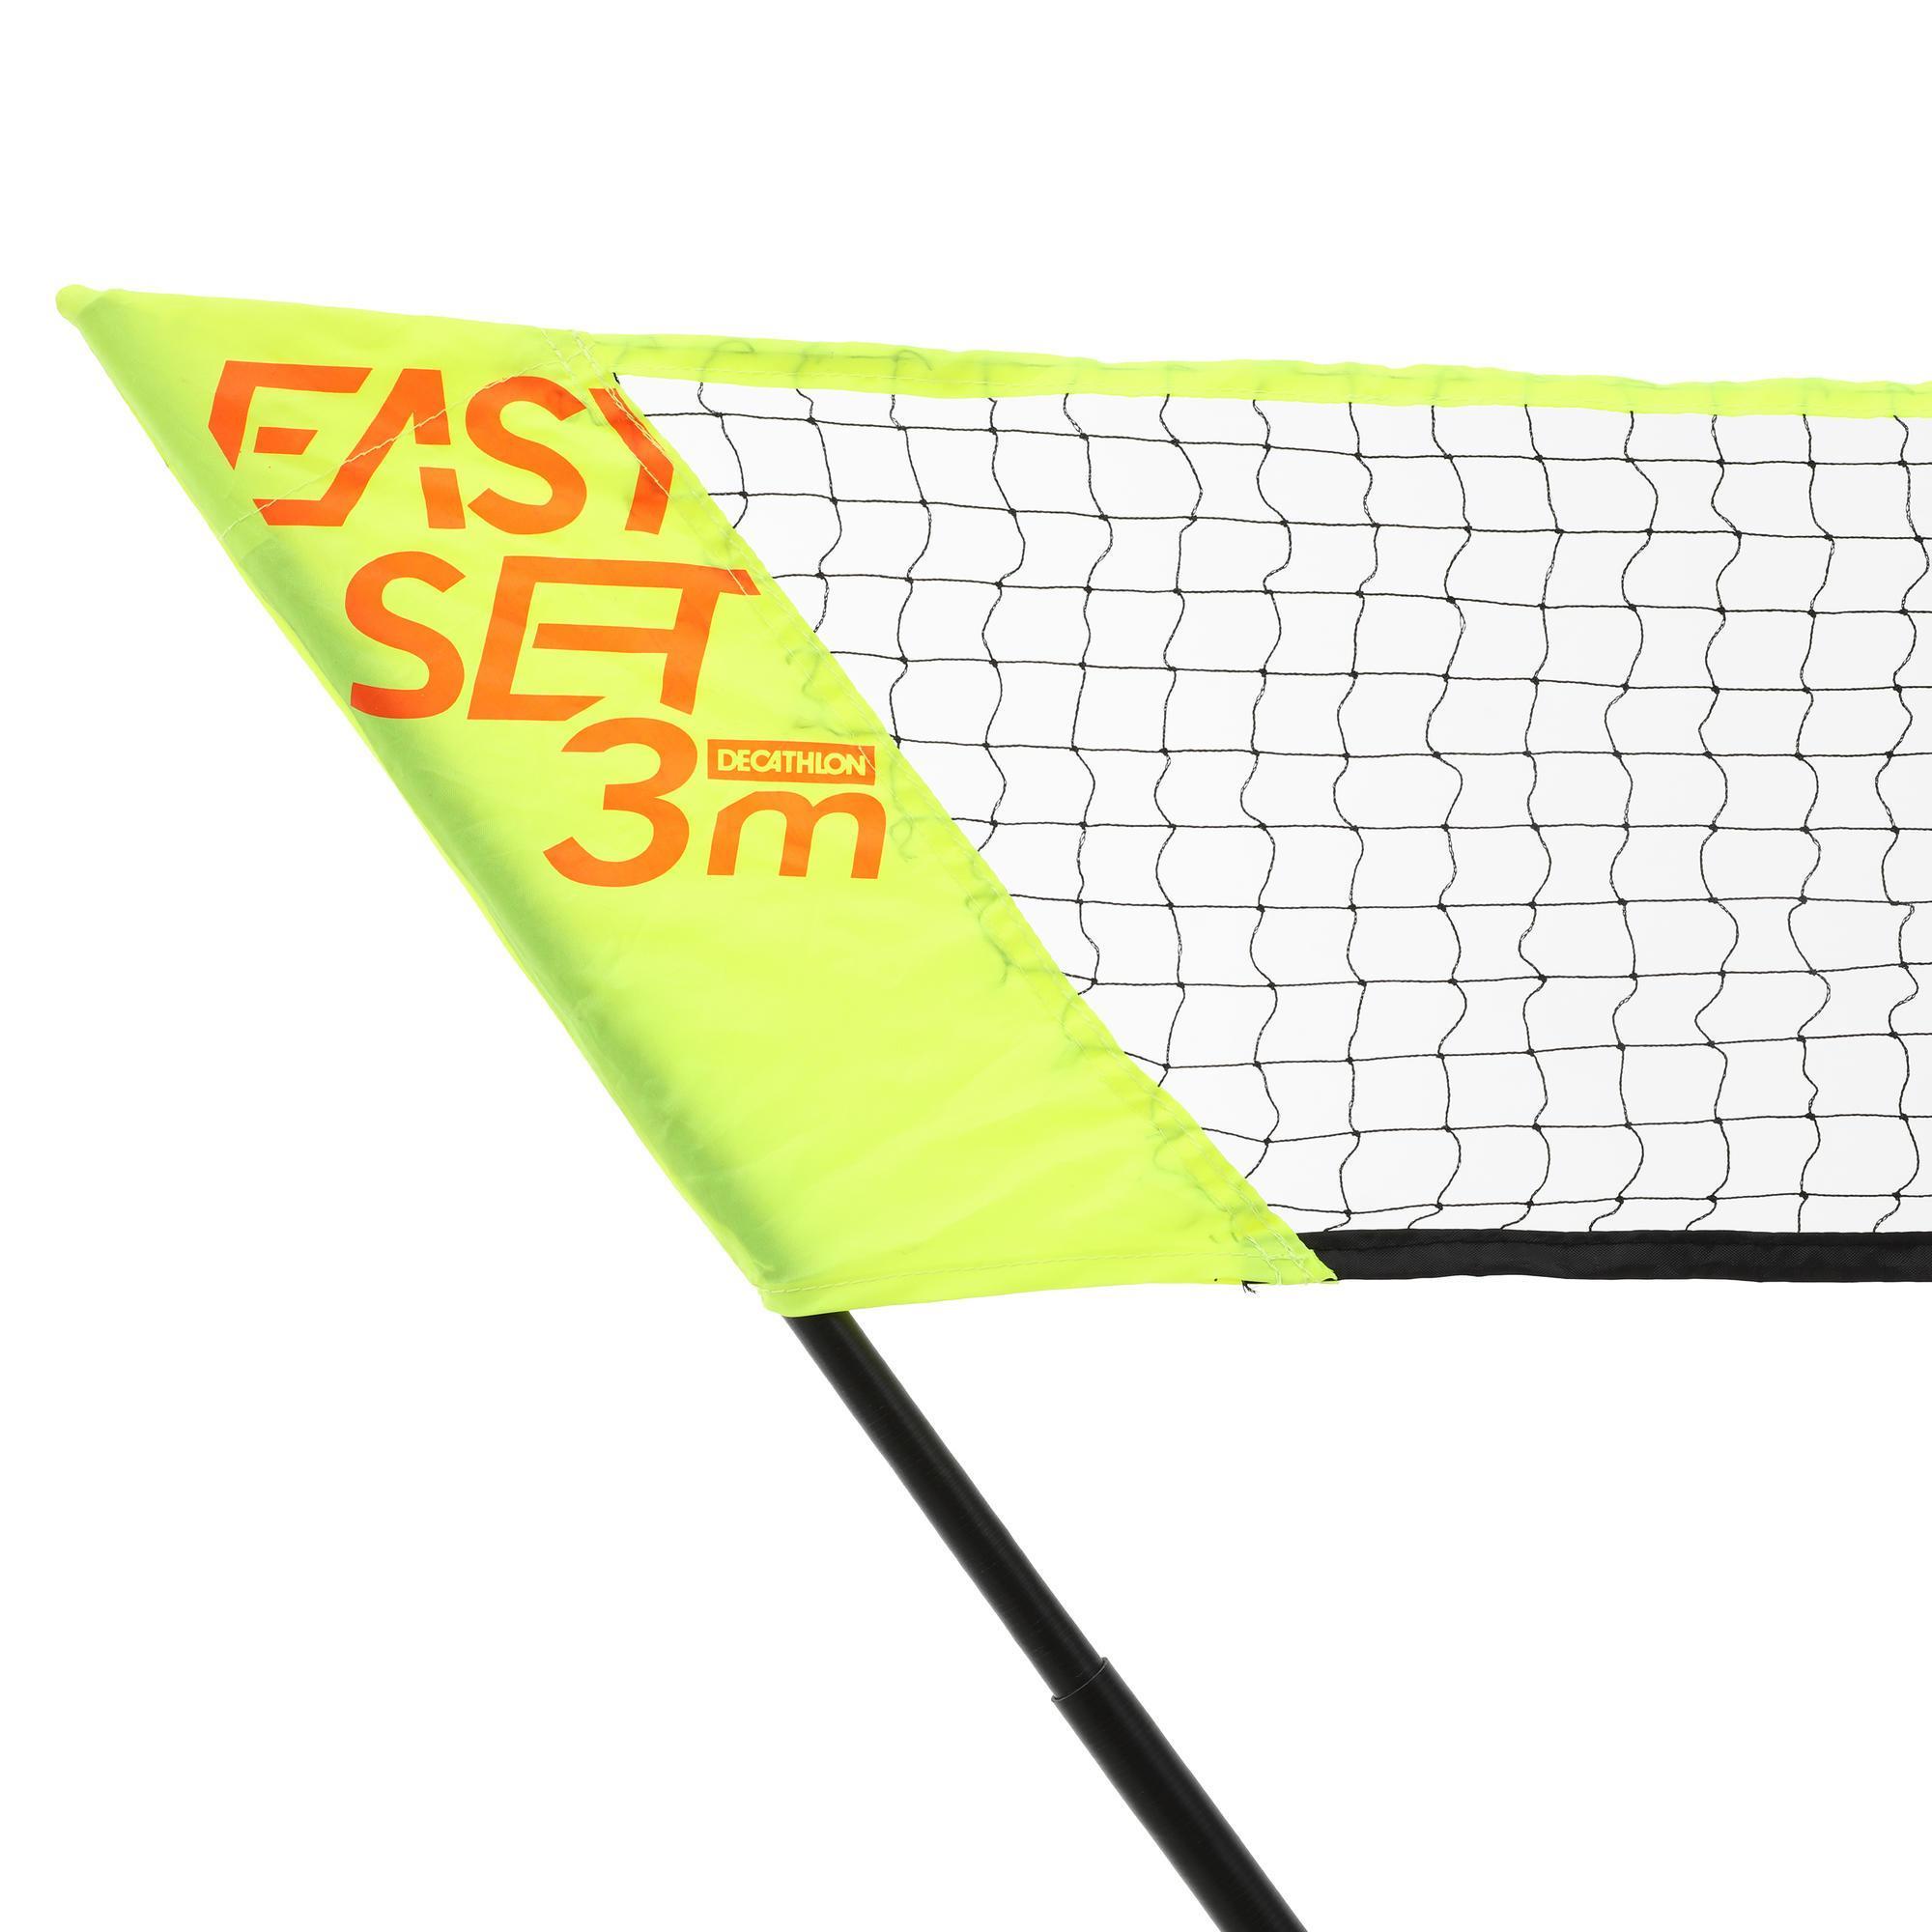 badminton decathlon kit